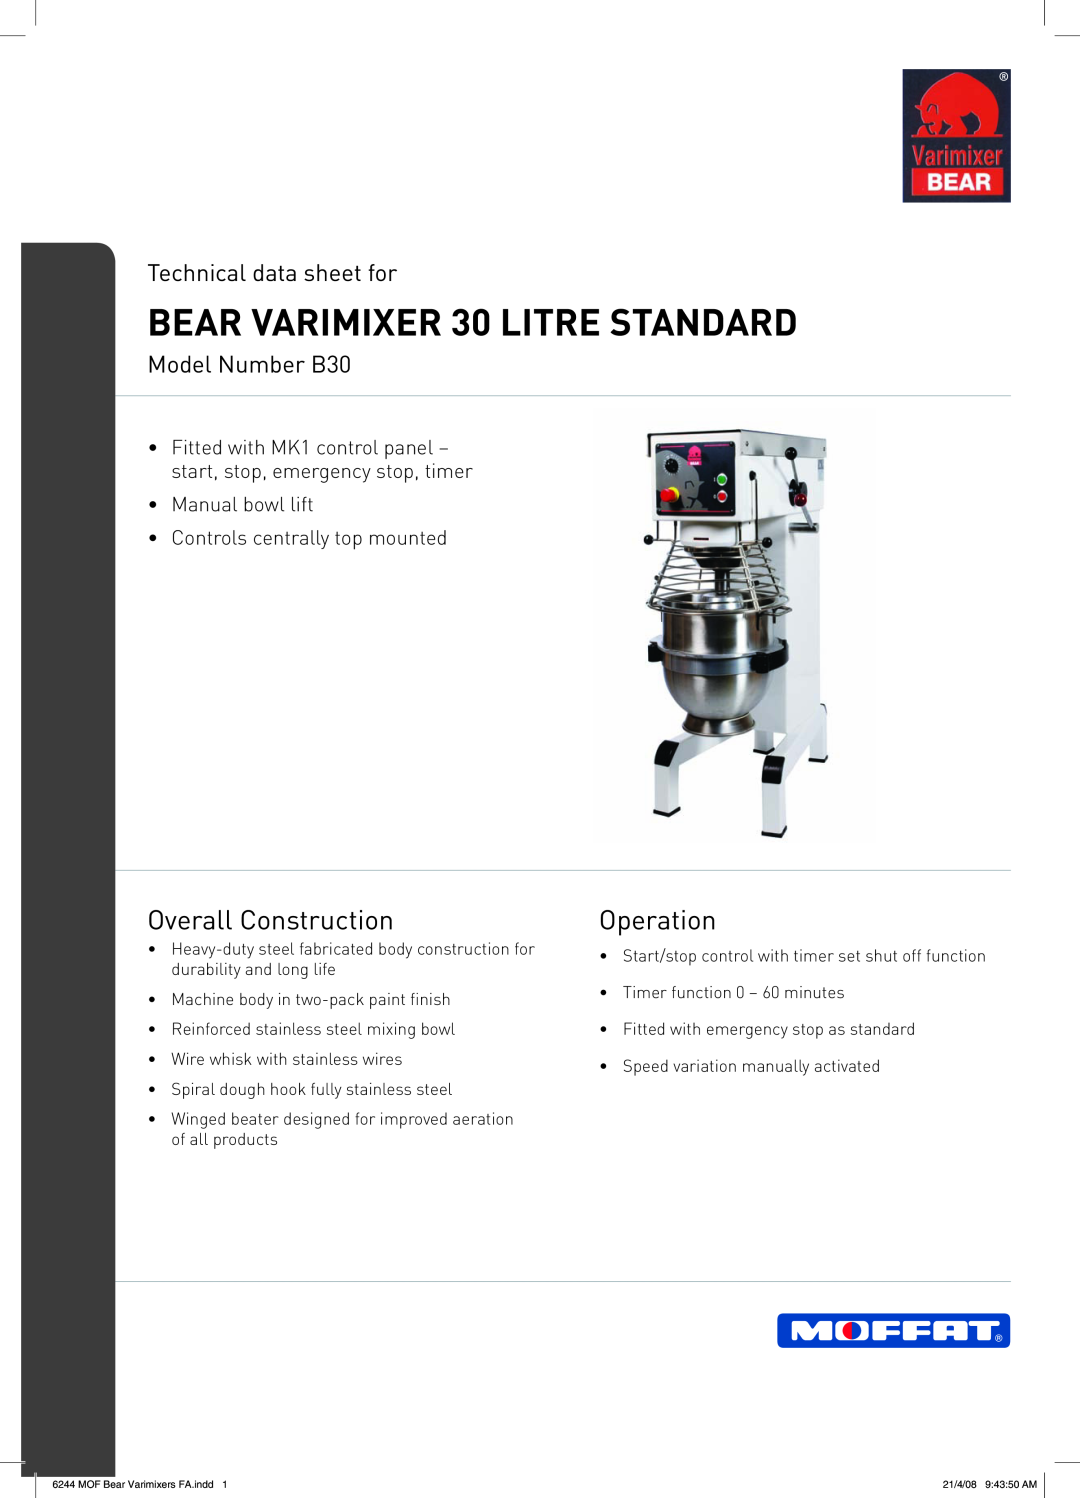 Moffat manual BEAR VARIMIXER 30 LITRE STANDARD, Technical data sheet for, Model Number B30, Overall Construction 